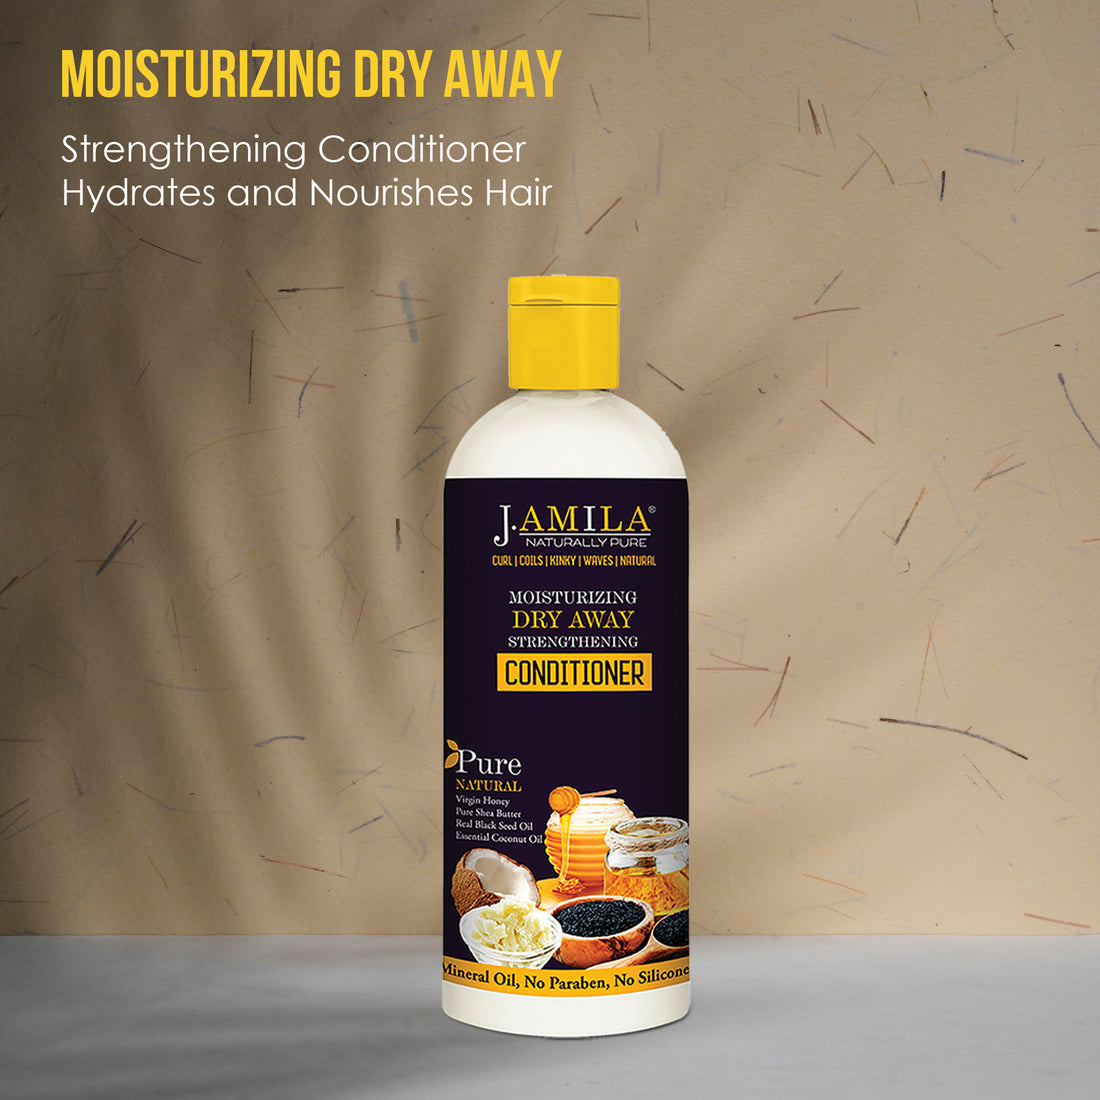 J. AMILA Naturally Pure Moisturizing Dry Away Conditioner